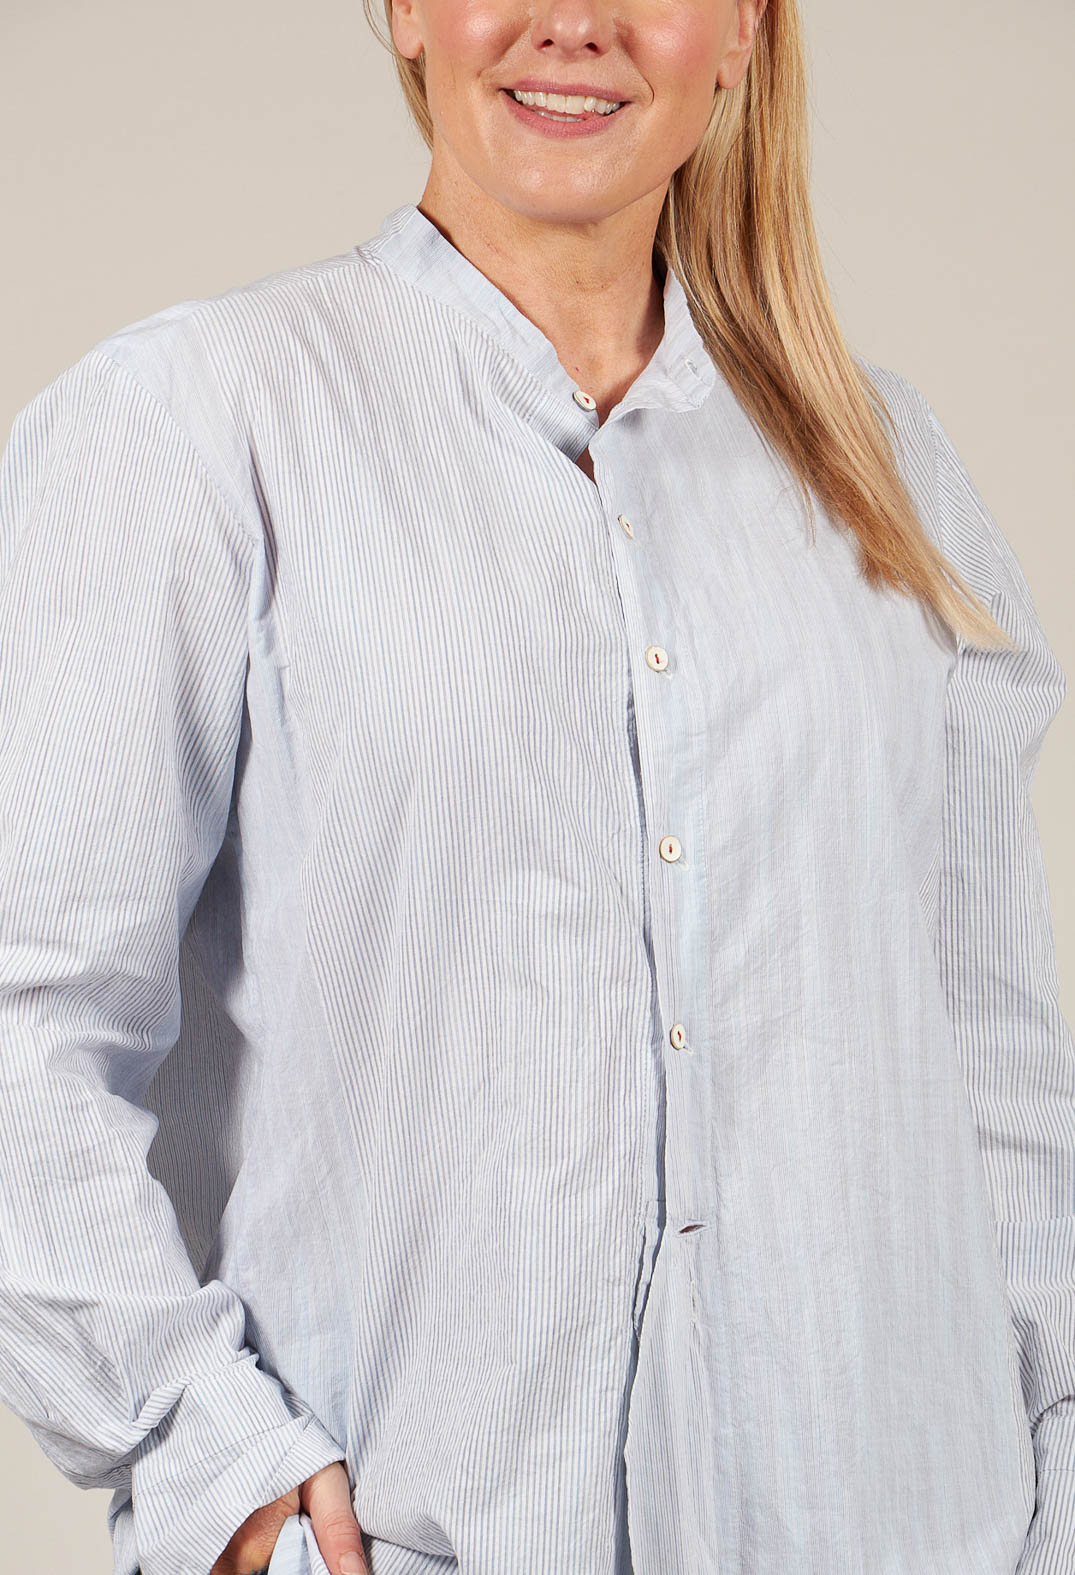 Unisex Charles Shirt in Blue Stripes